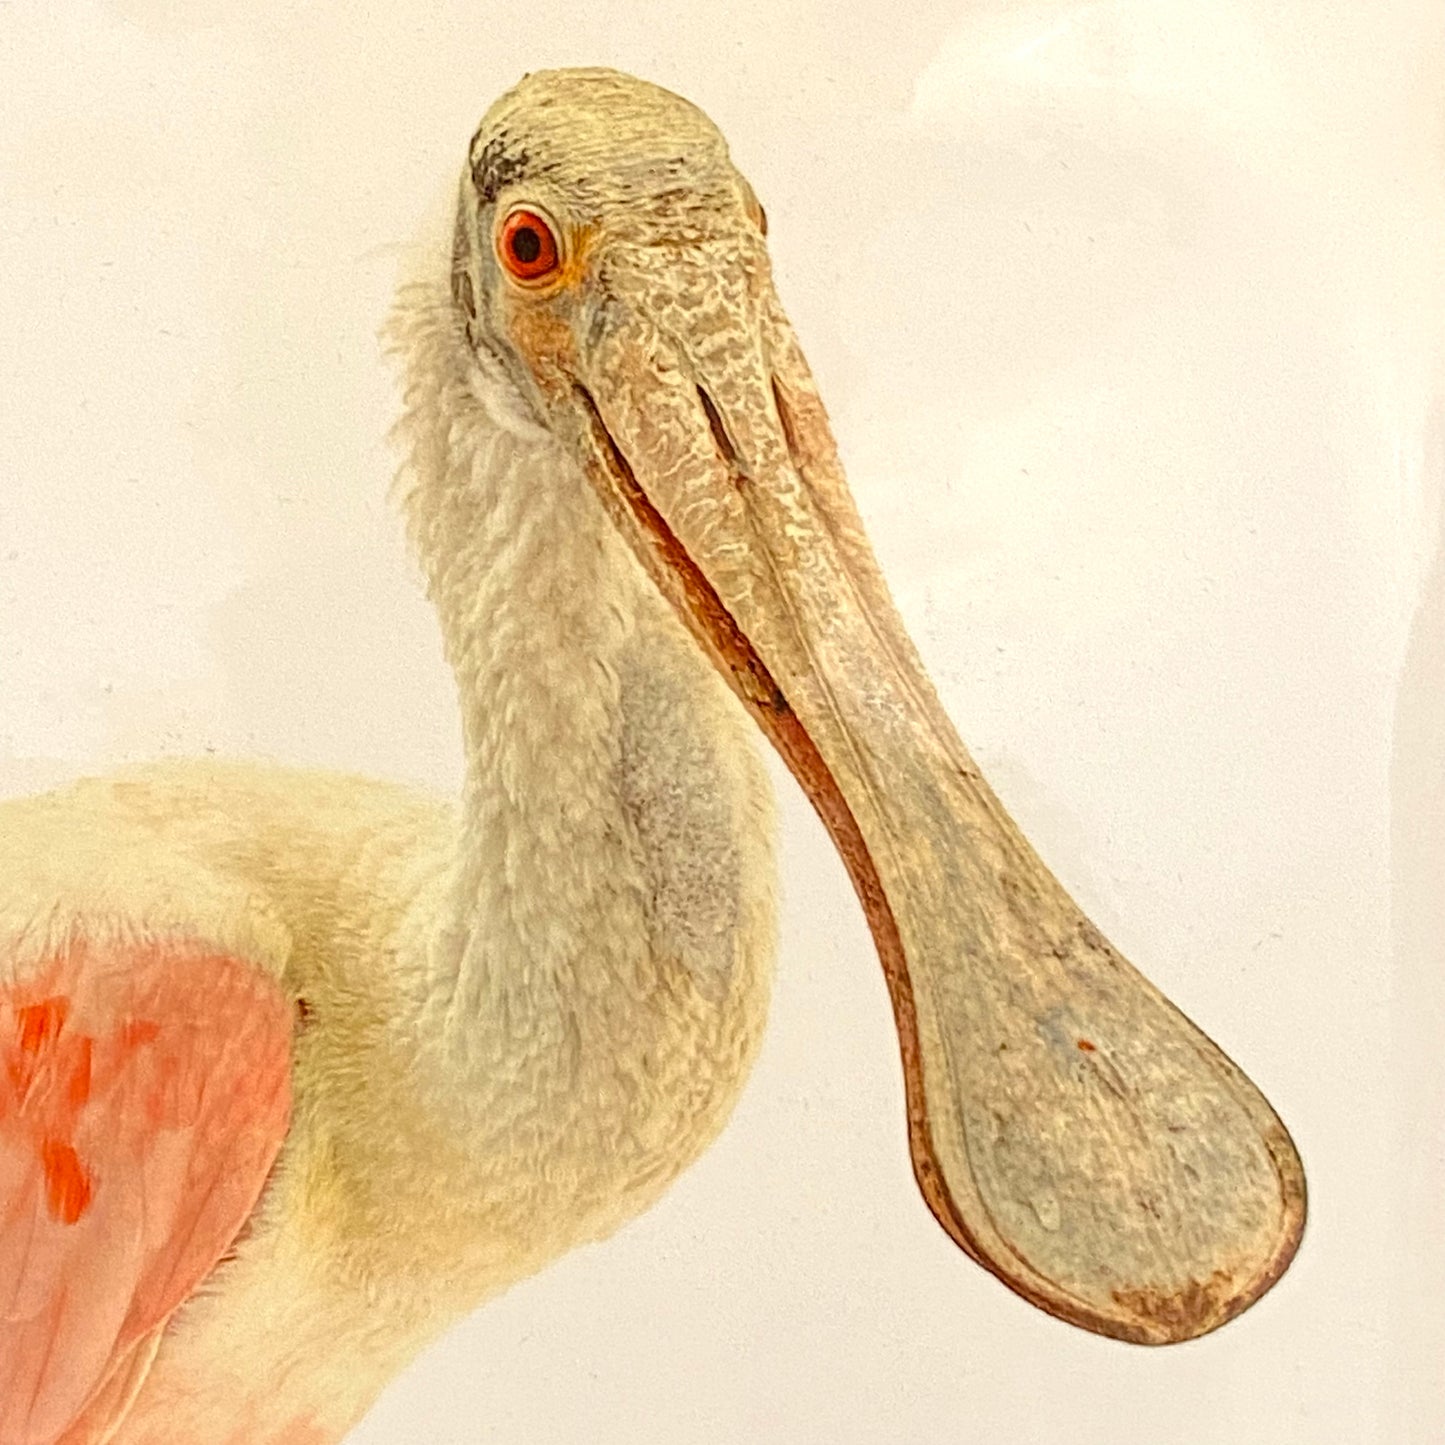 New wrapped Roseate Spoonbill Audubon bird art signed print by artist